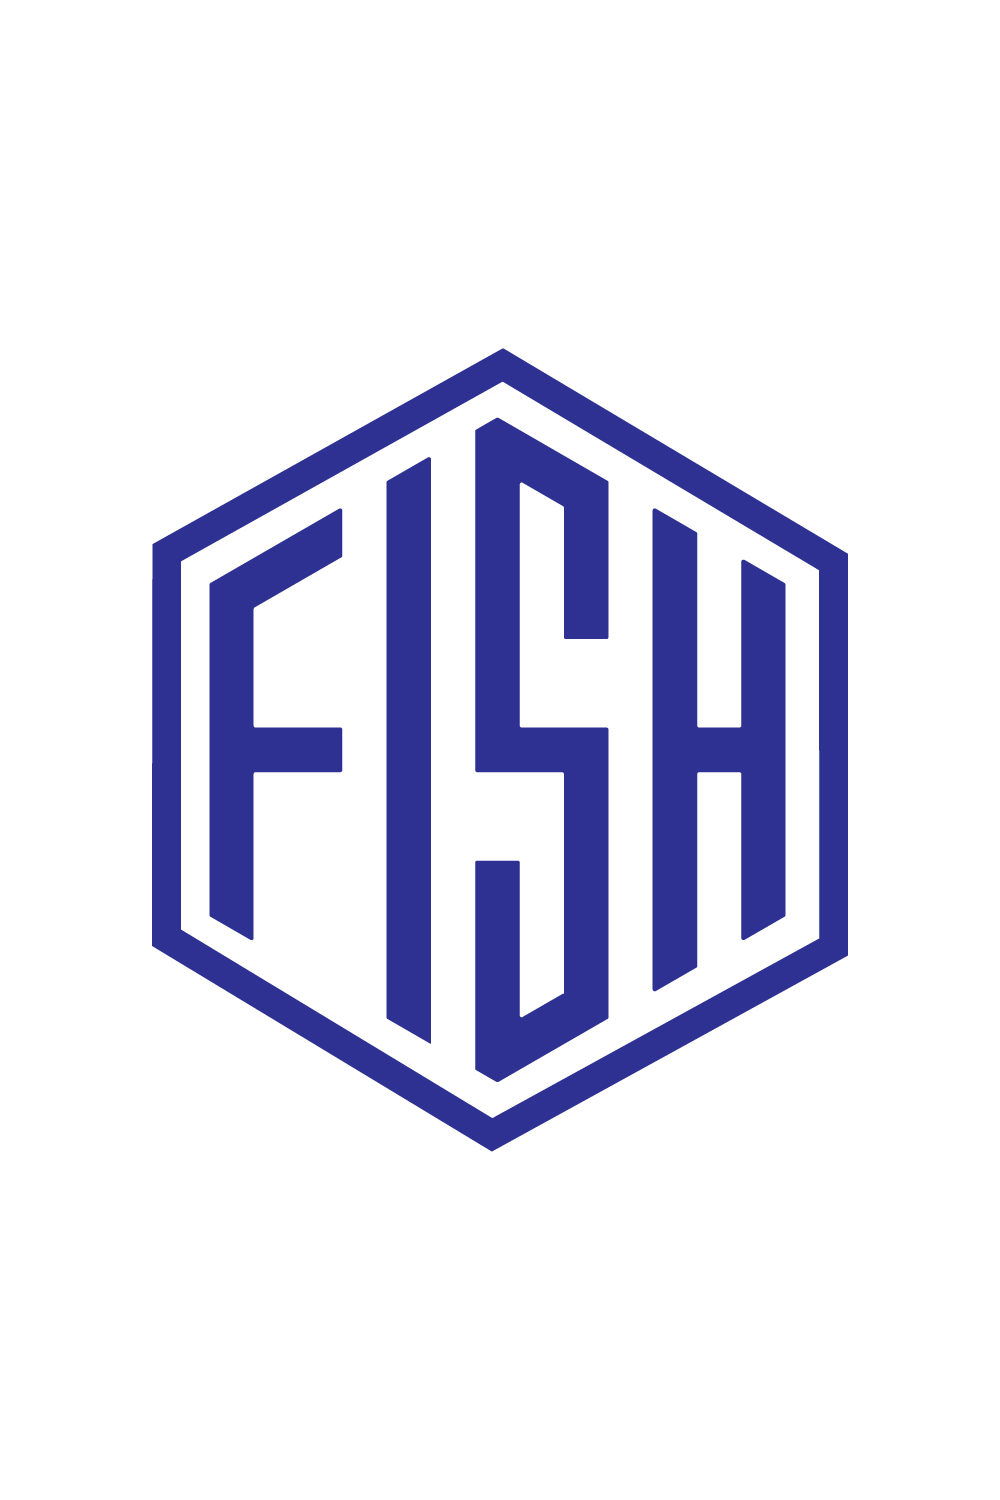 Fish logo design vector images FISH logo monogram icon design Polygon fish logo best icon pinterest preview image.